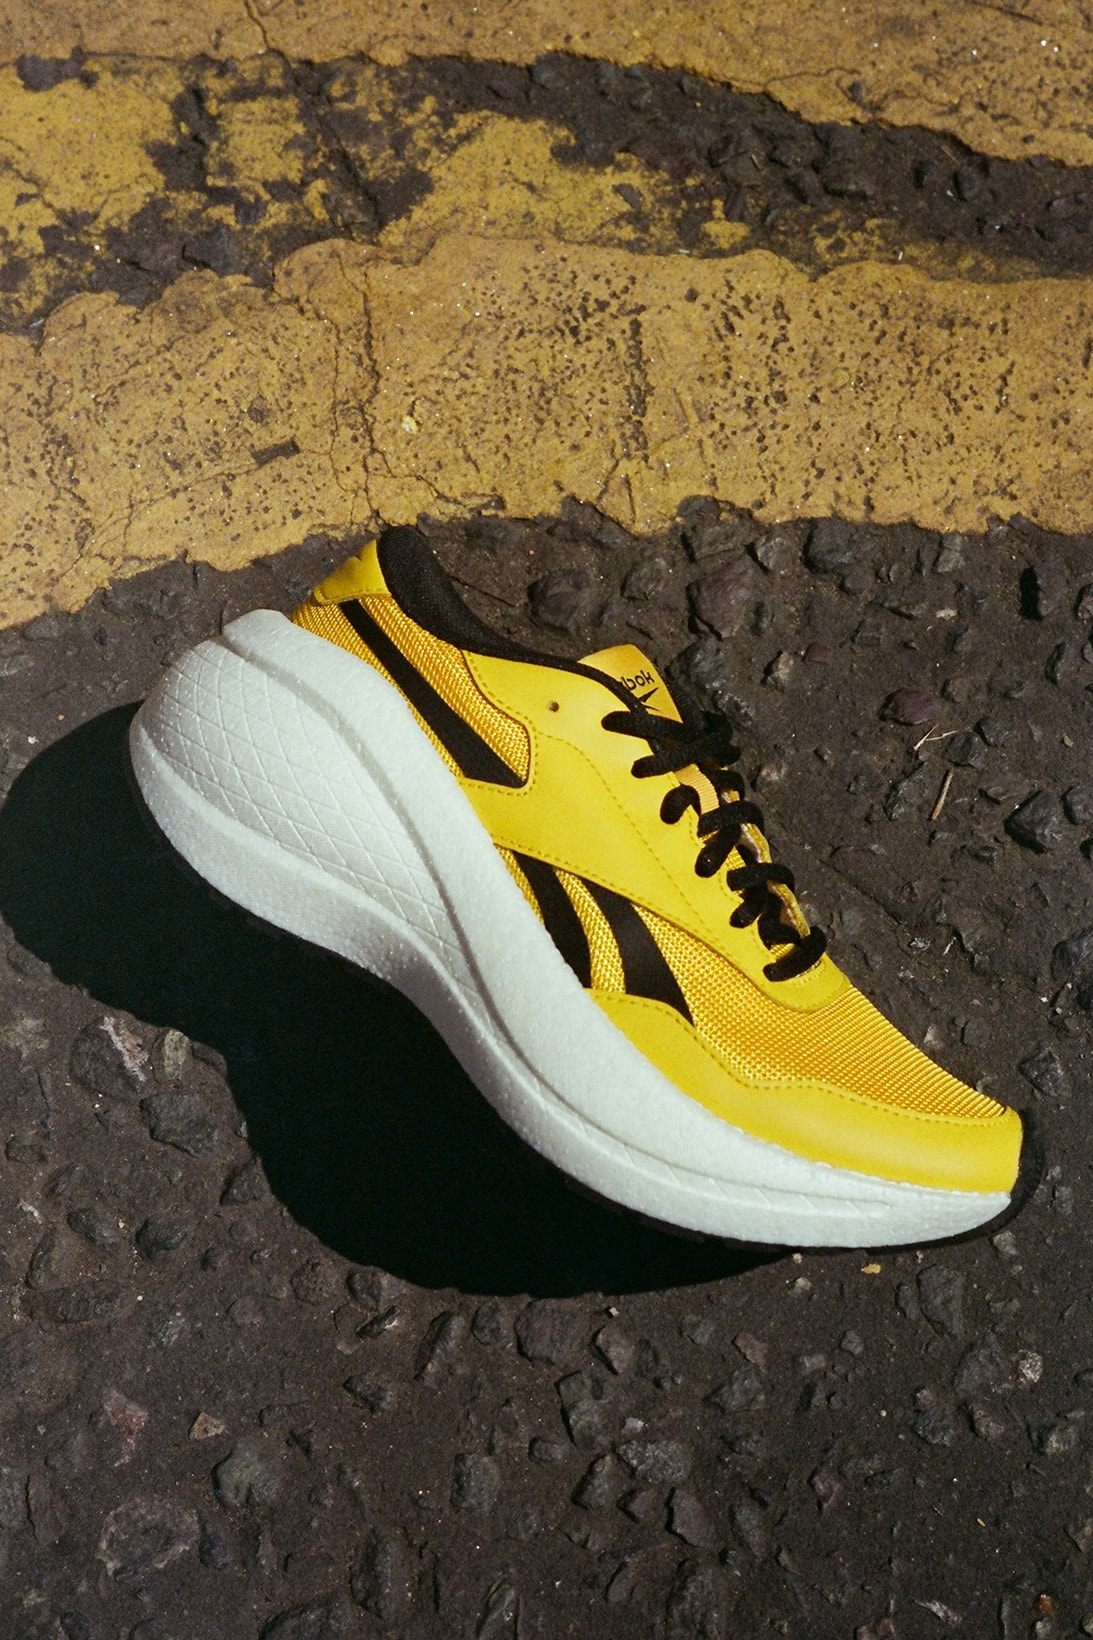 reebok metreon womens sneakers charli cohen collaboration black white yellow shoes footwear sneakerhead